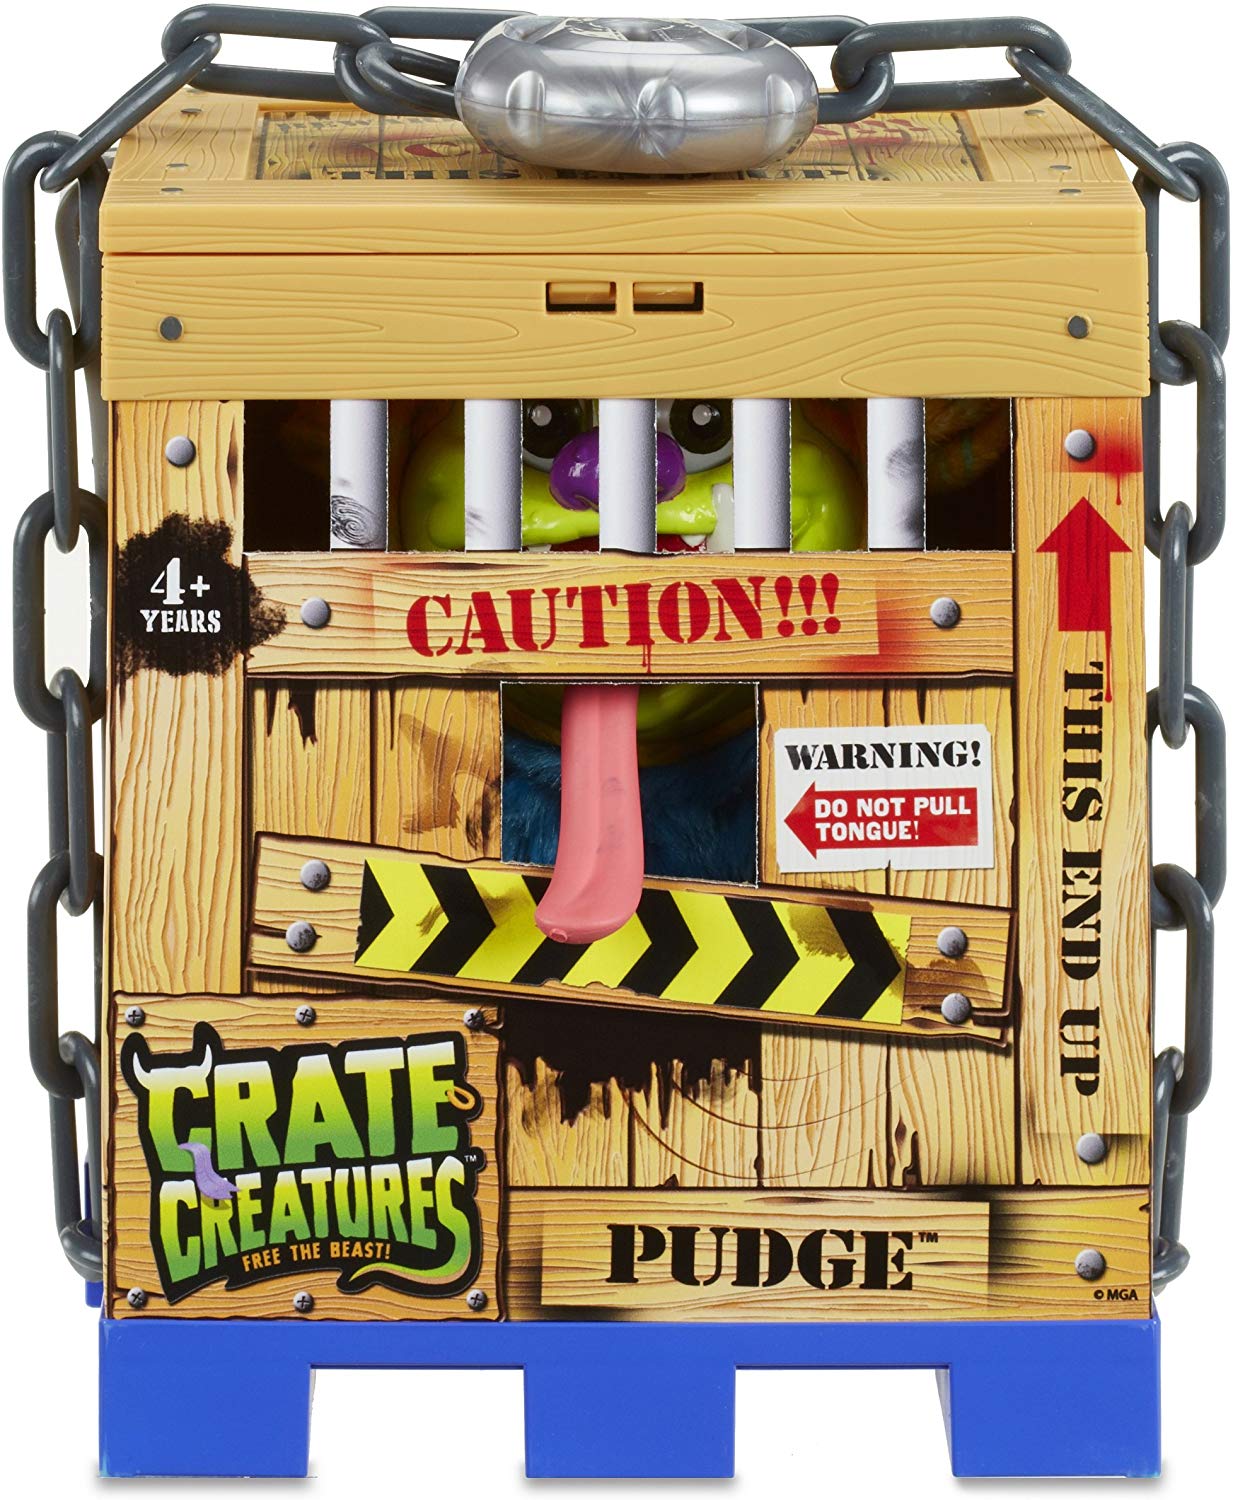 Интерактивная игрушка Crate Creatures - Монстр Падж, свет и звук  